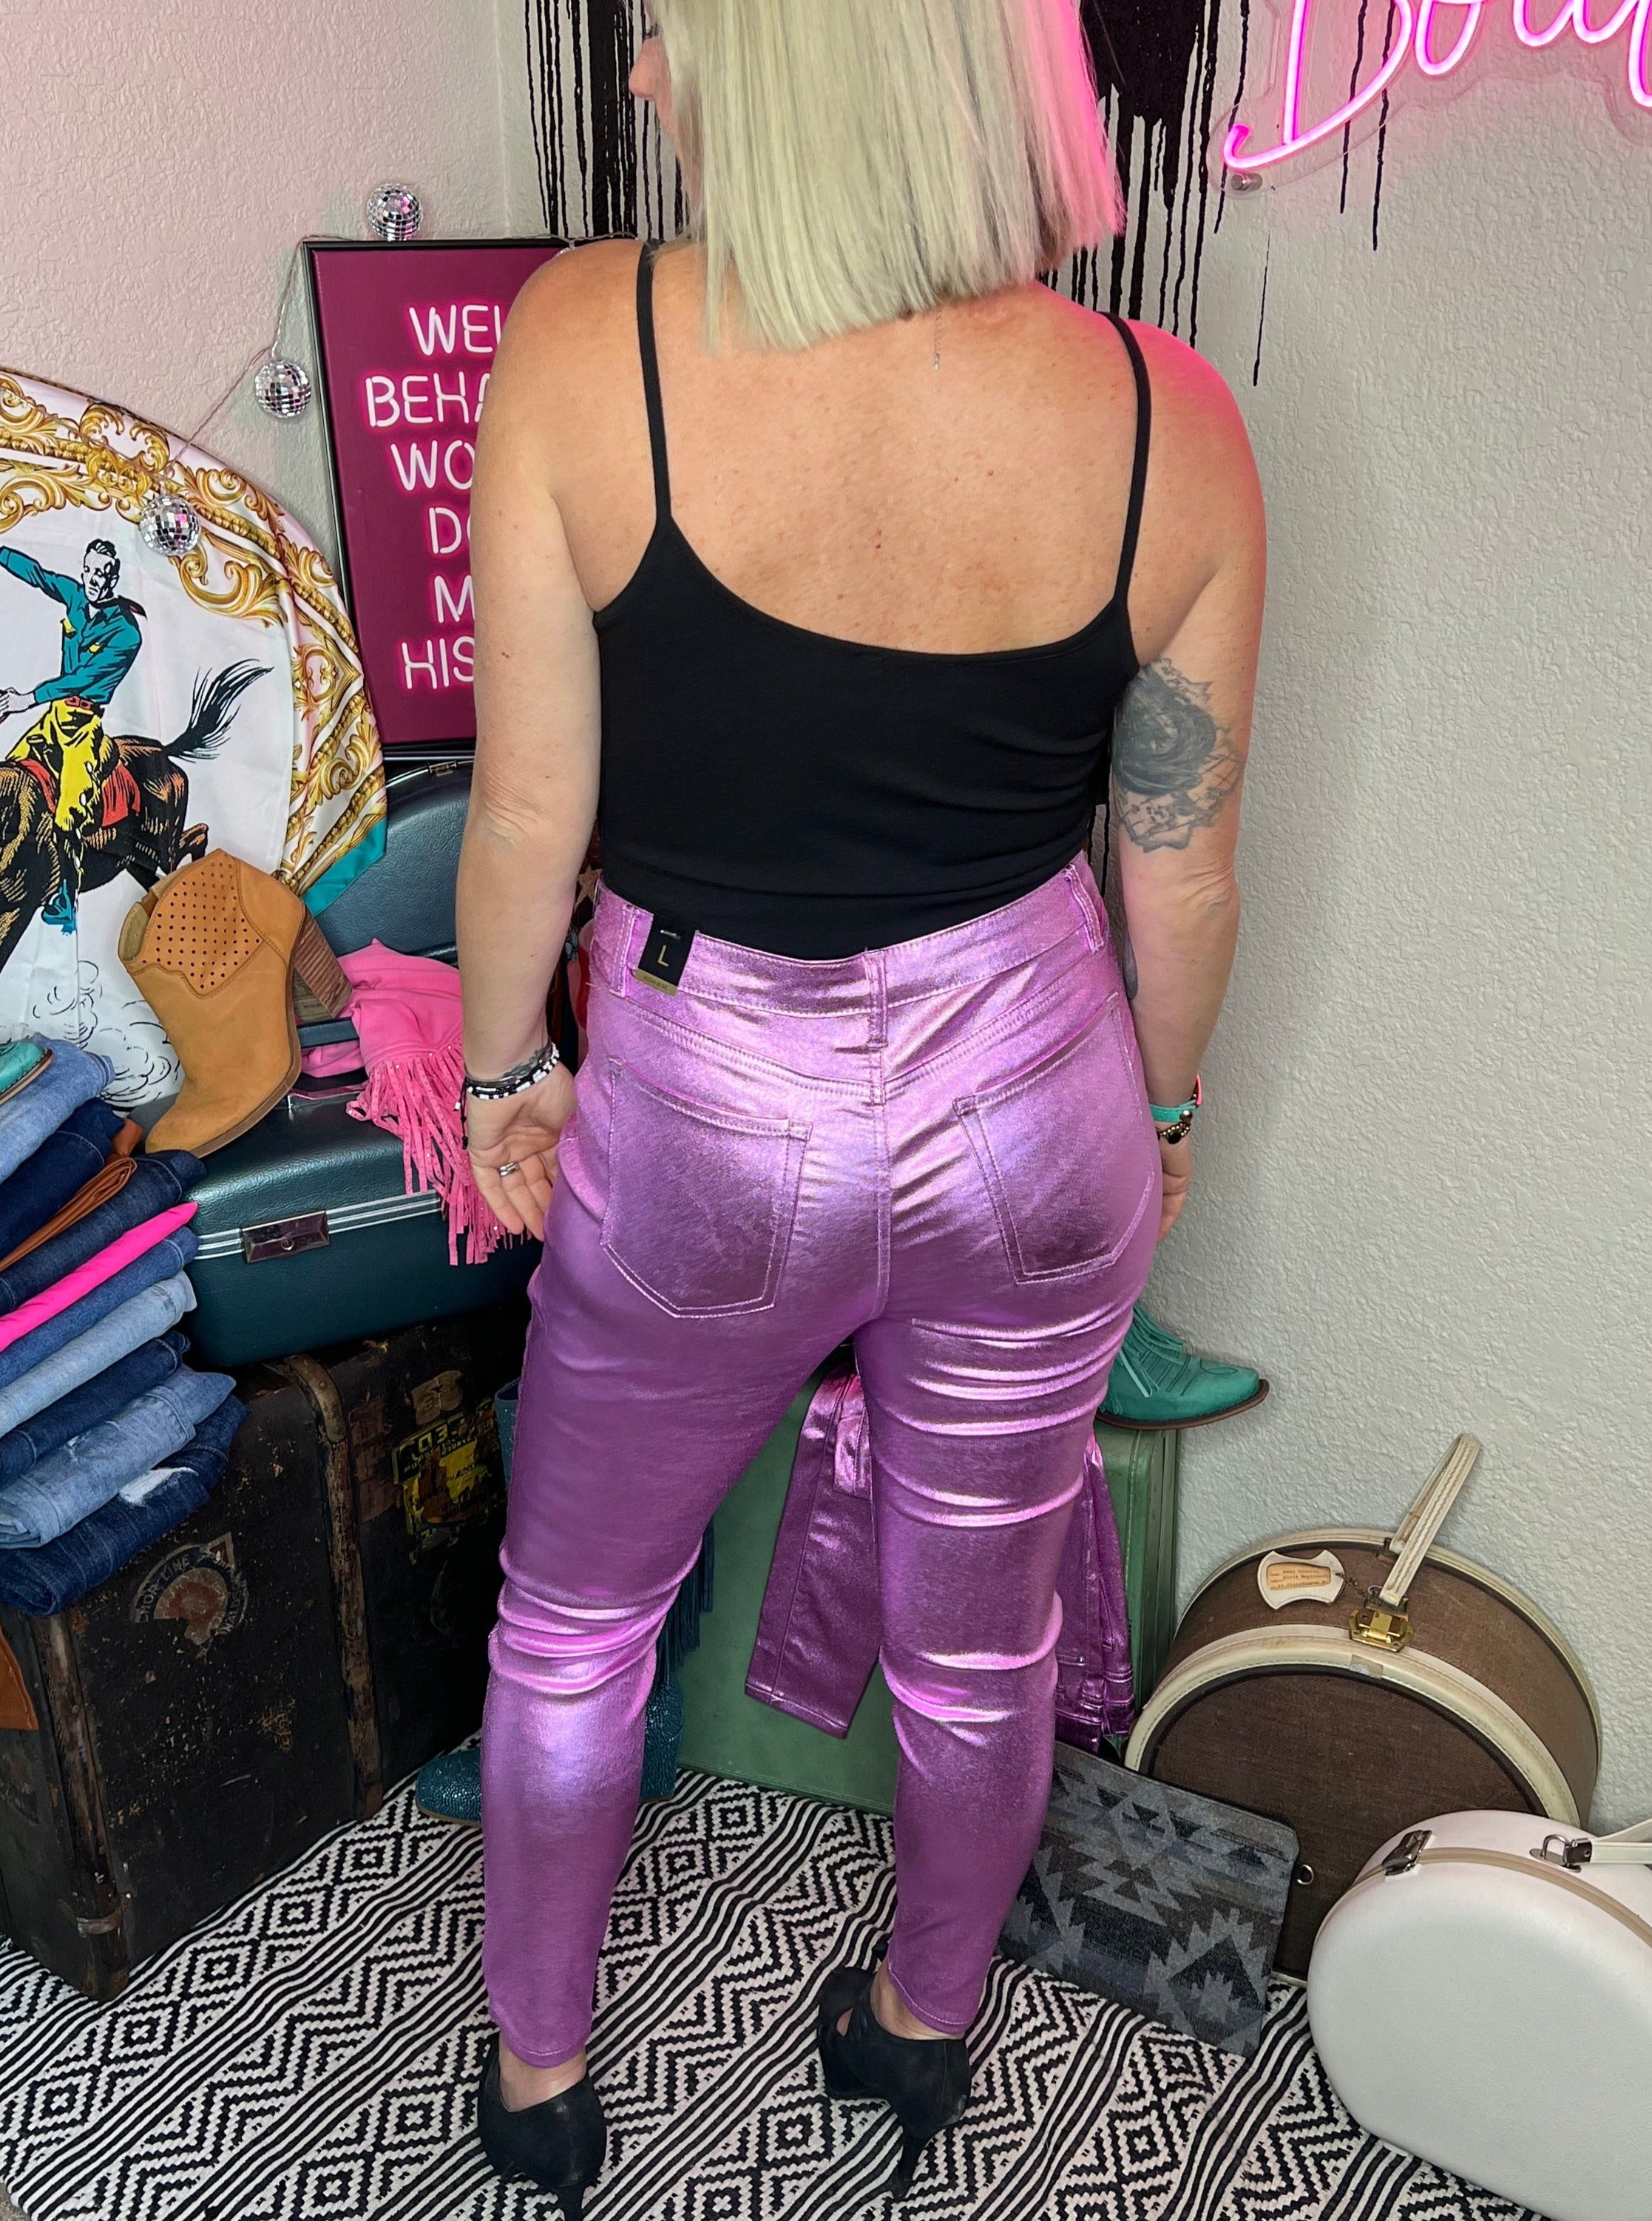 YMI Metallic Pants in lavender